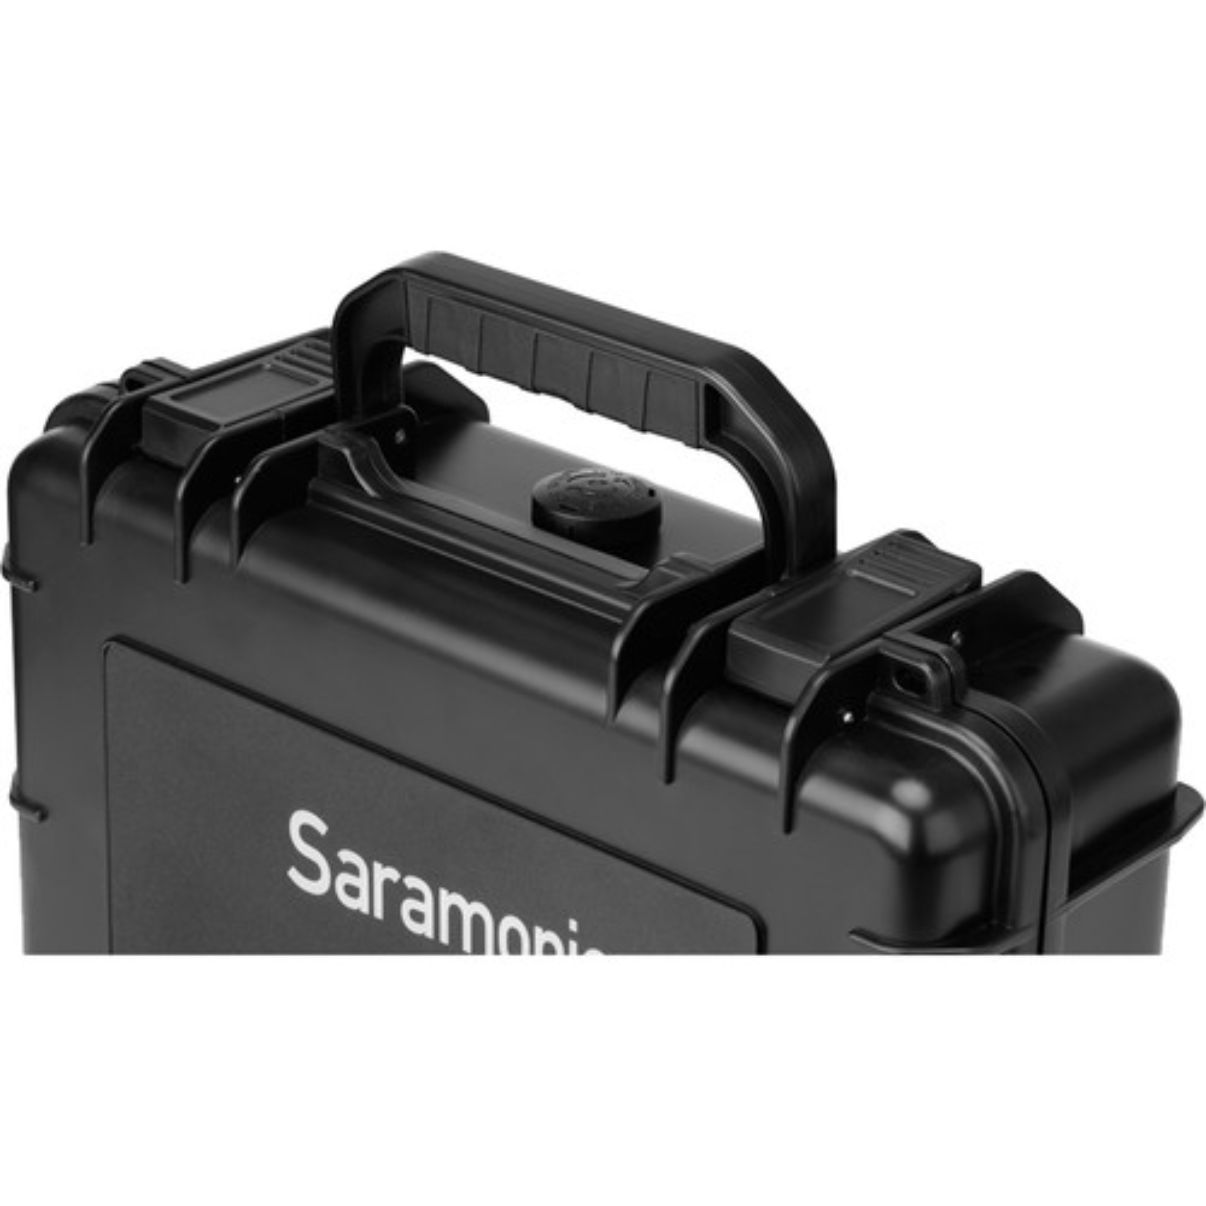 Saramonic Plastic Carrying Case (IP 67 Rating) with Foam Insert